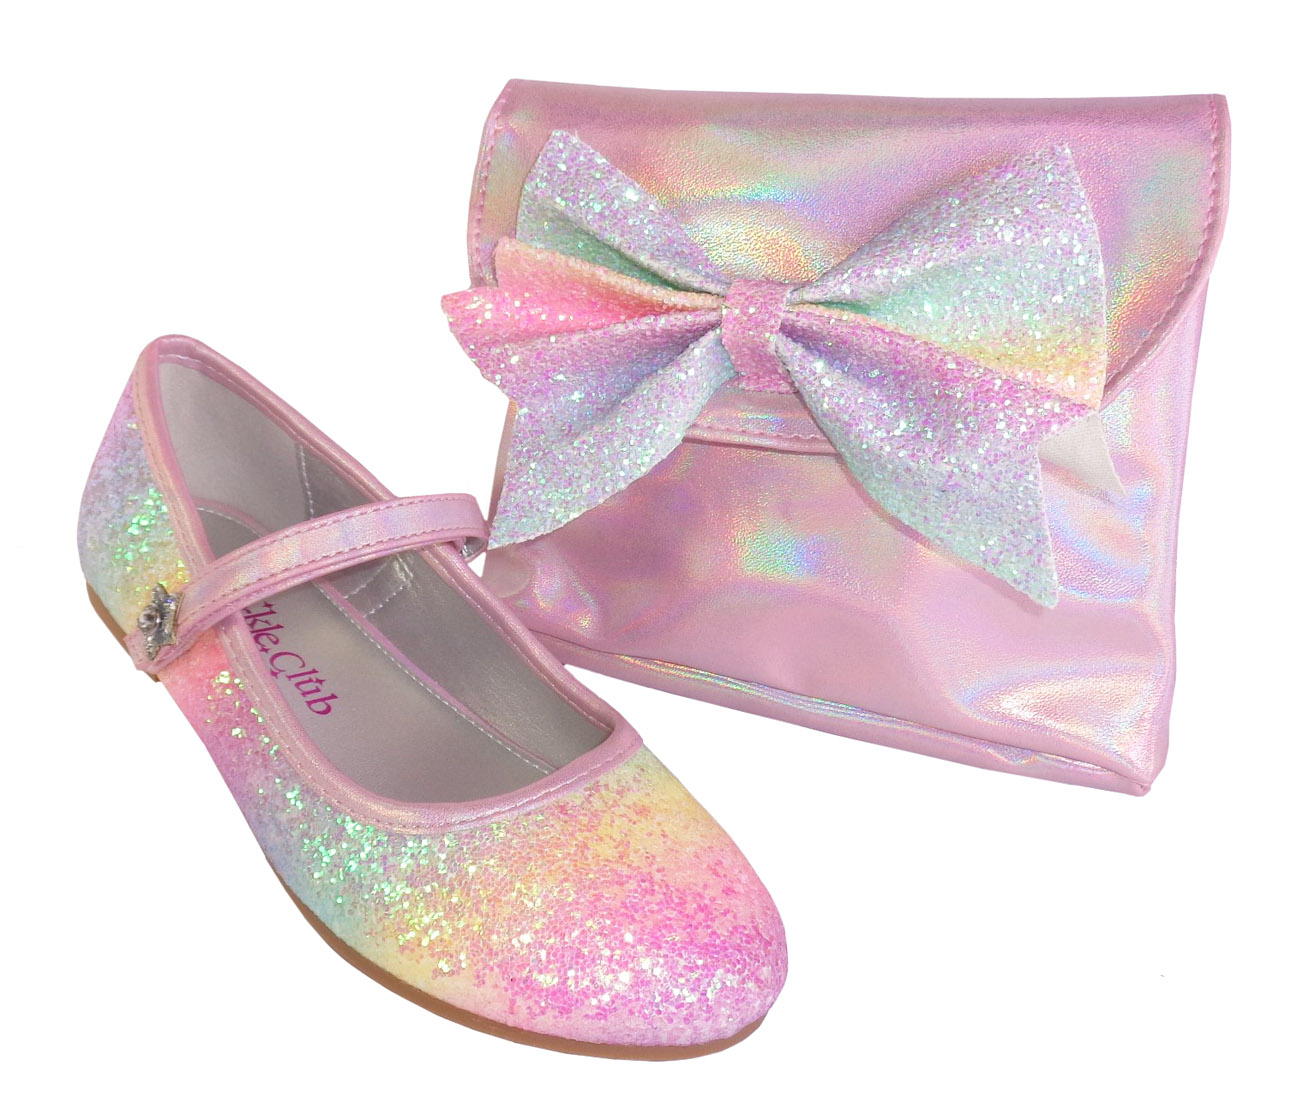 Handbag Matching Bag Set Ballet Pumps Girls Rainbow Glitter Bow Party Shoes